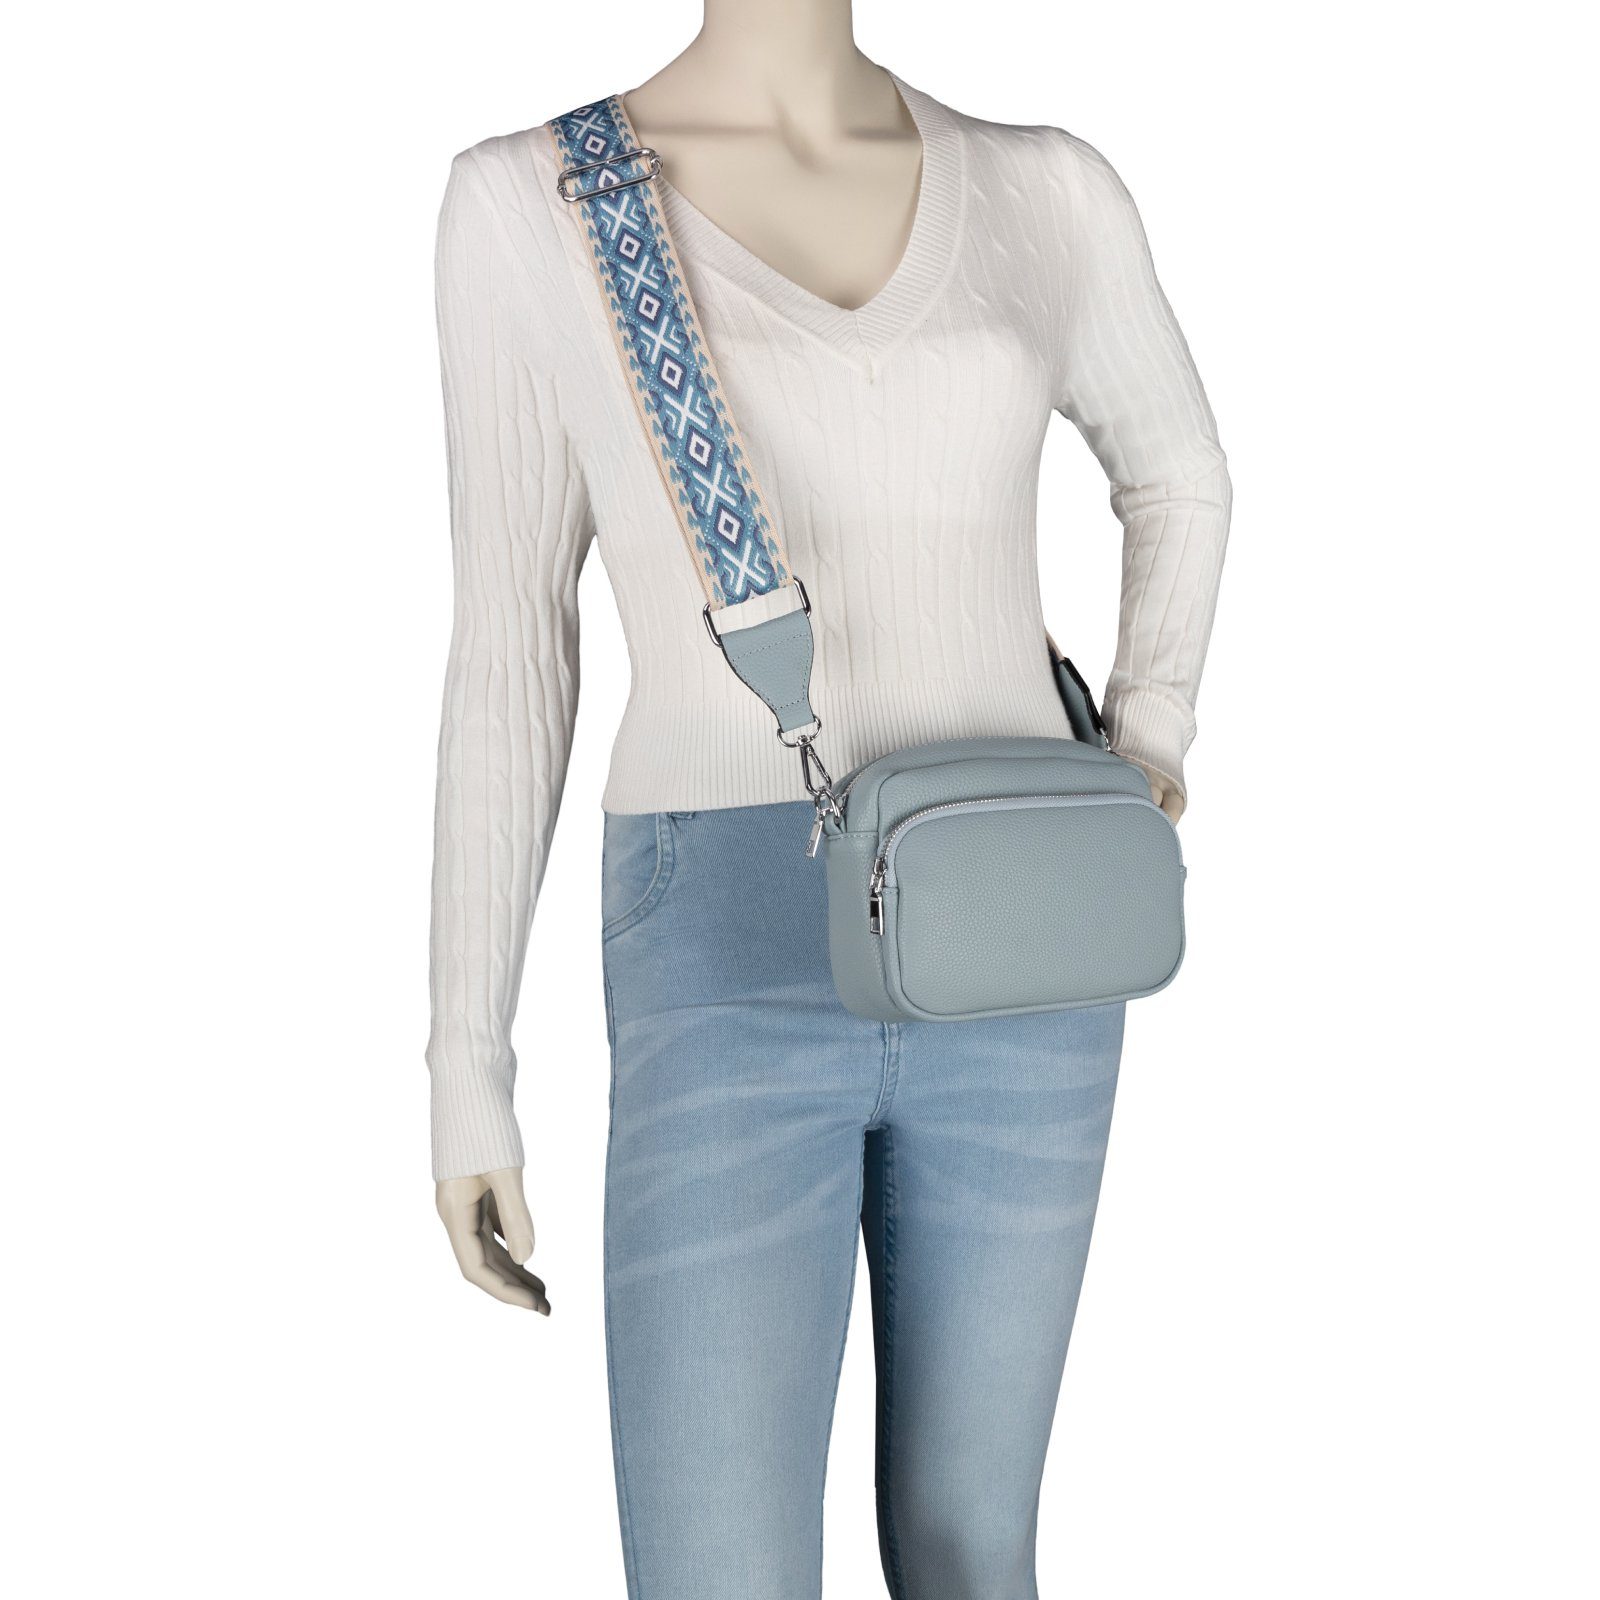 Crossbody-Bag Bauchtasche Schultertasche, L.BLUE Kunstleder als tragbar Gürteltasche Umhängetasche Umhängetasche Hüfttasche Italy-D, EAAKIE CrossOver,